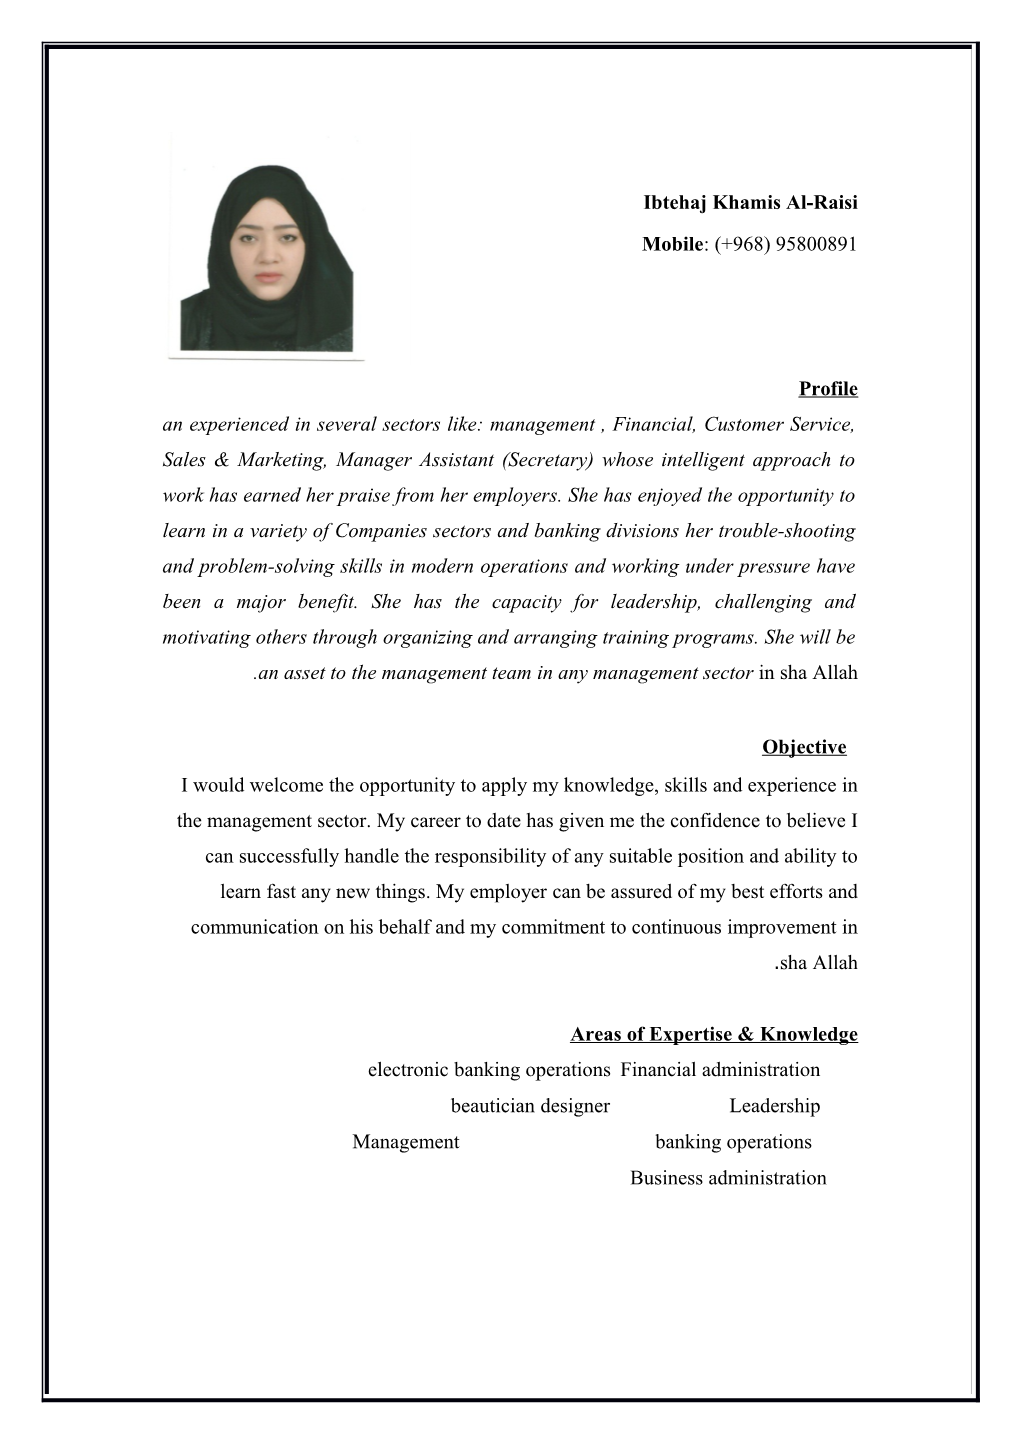 Curriculum Vitae Ibtehaj Khamis Al-Raisi June 2008